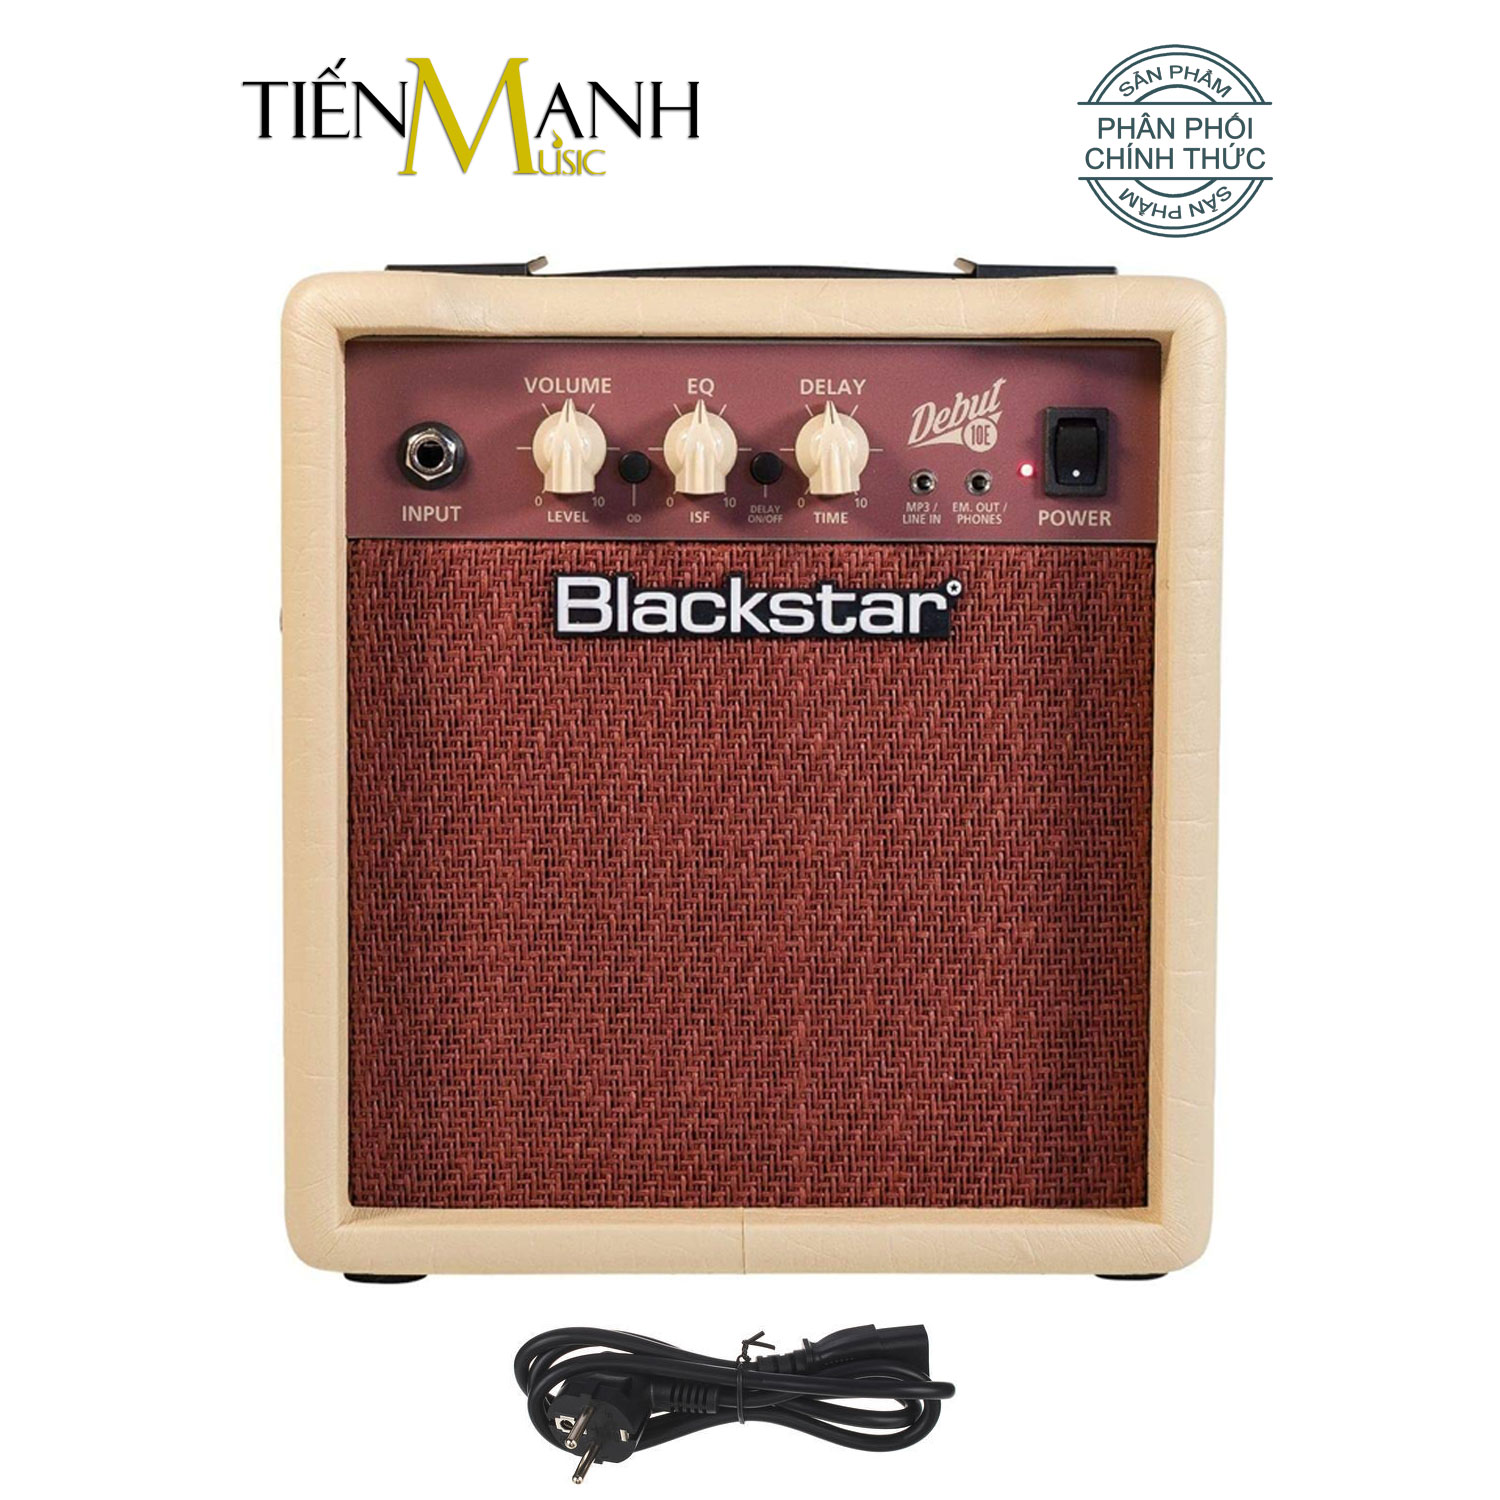 Genuine amply electric guitar Blackstar debut 10e amplifier guitar